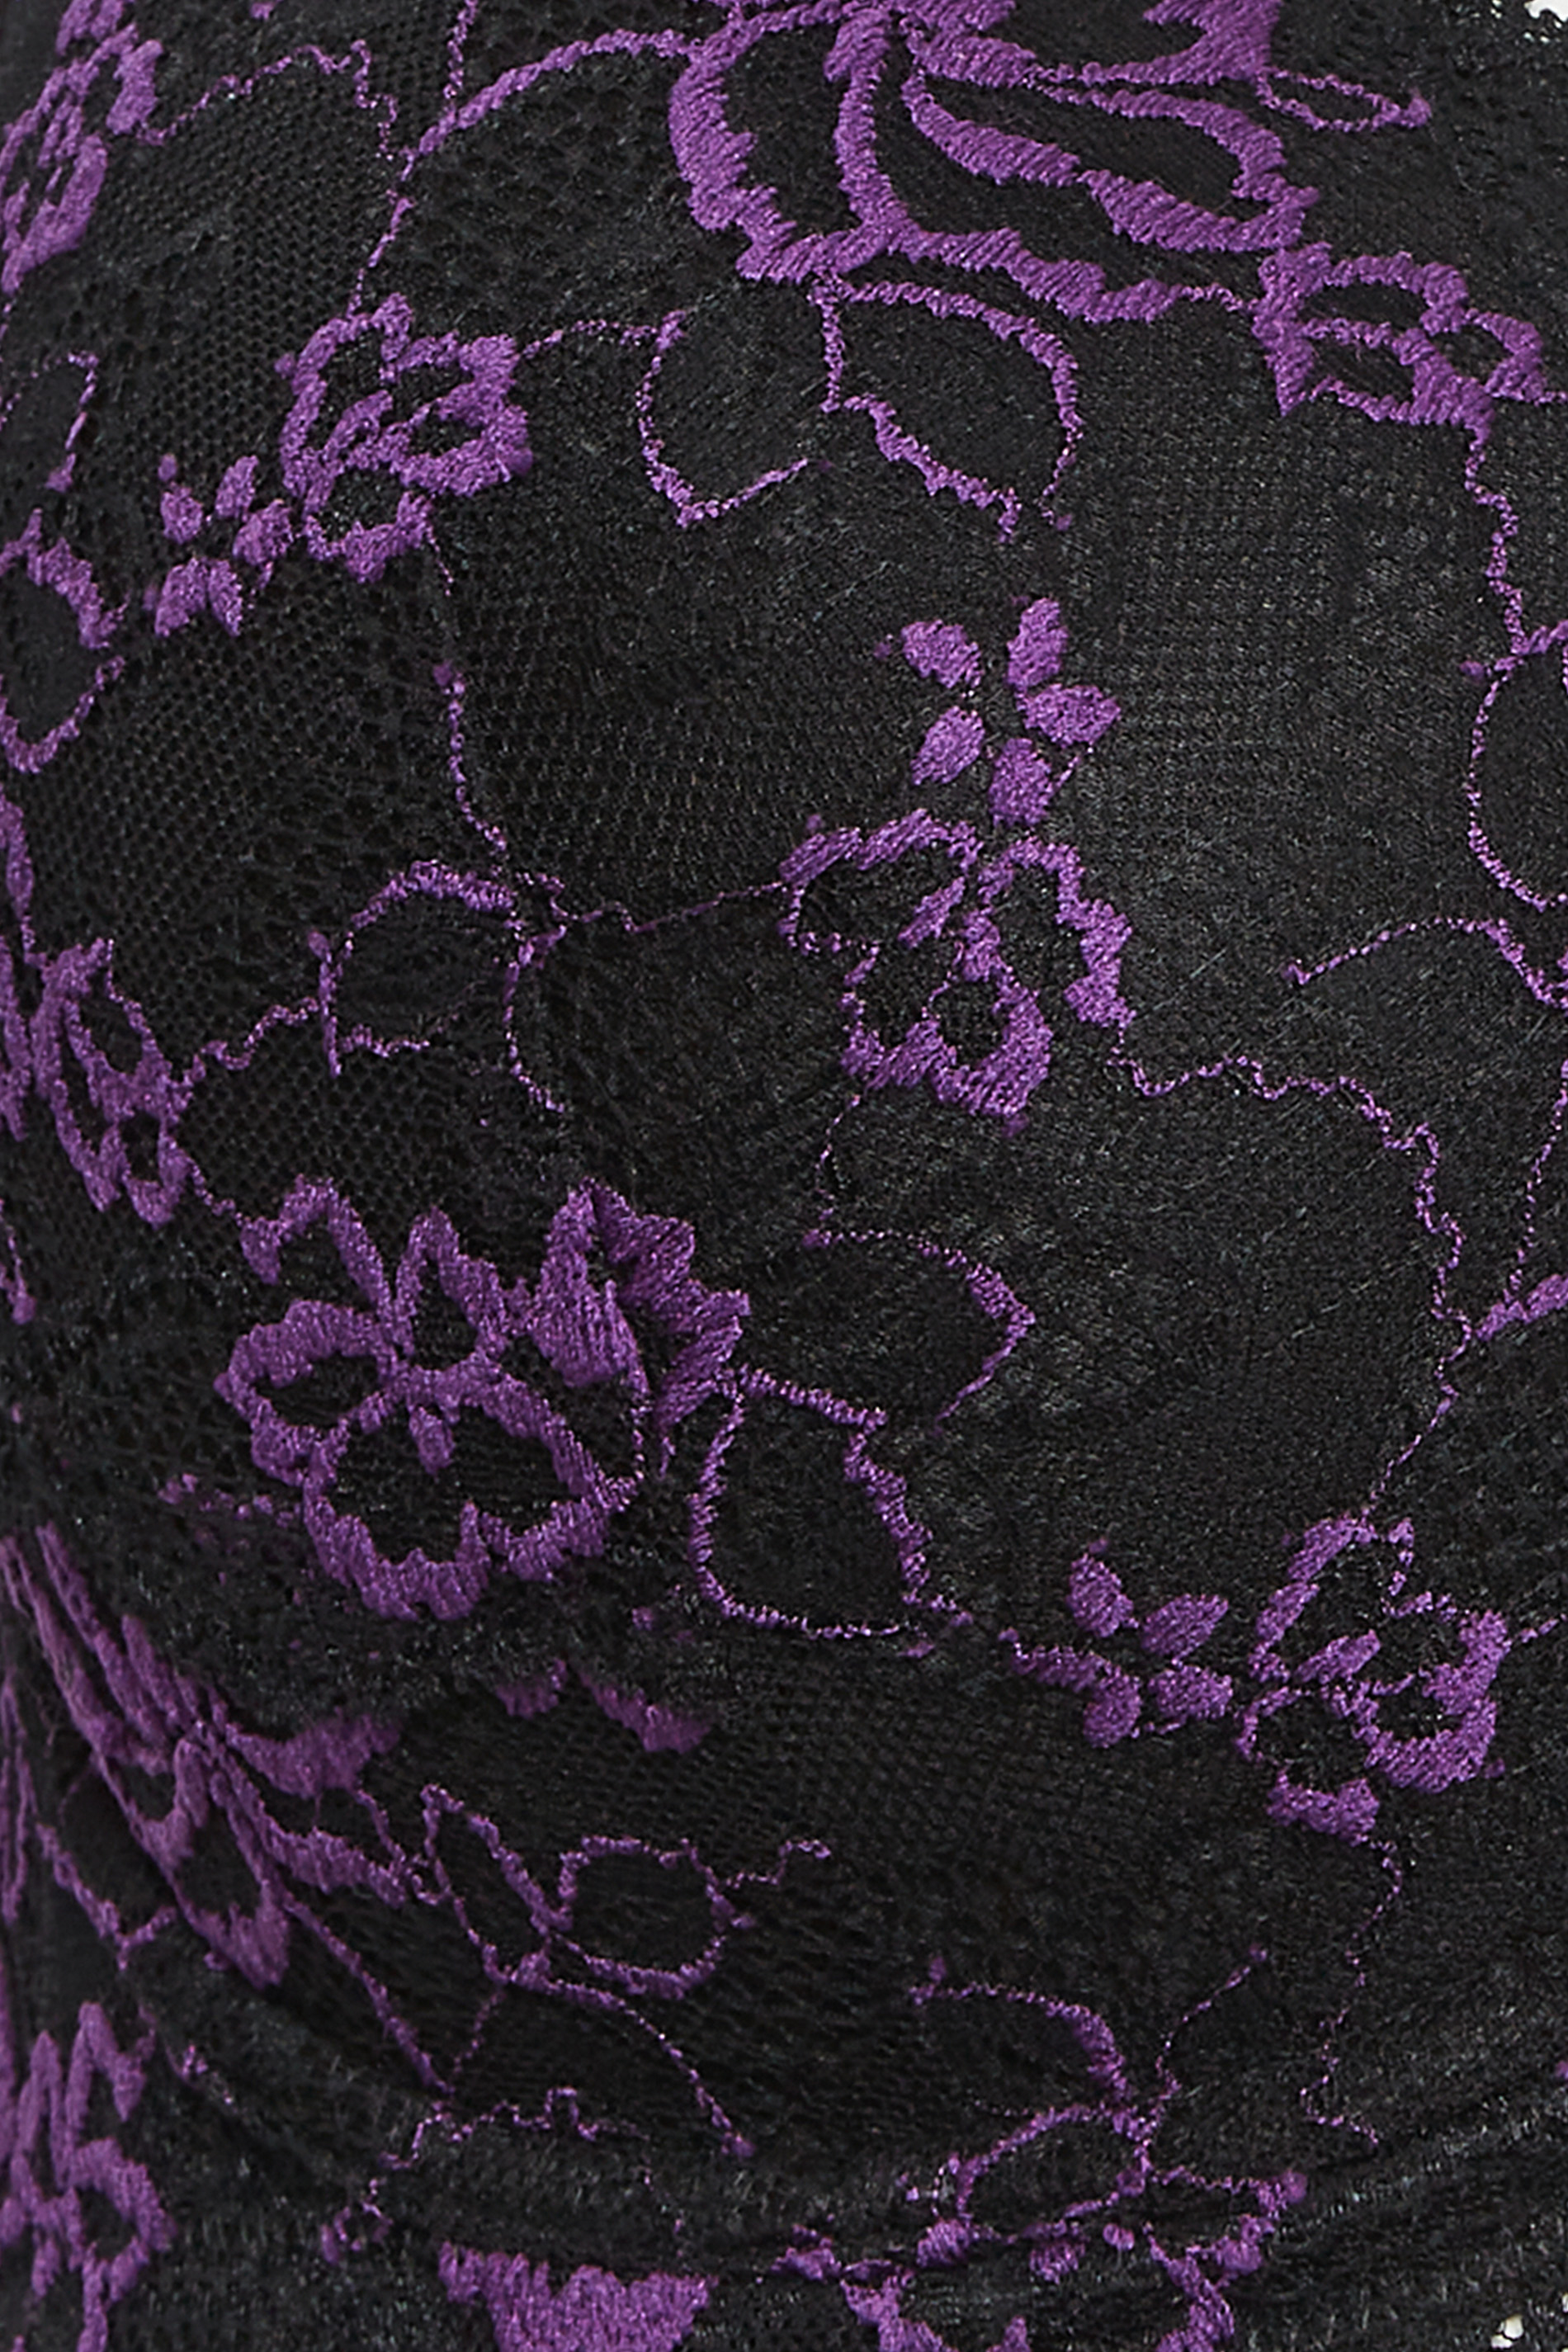 Purple Bra Black Lace Image & Photo (Free Trial)